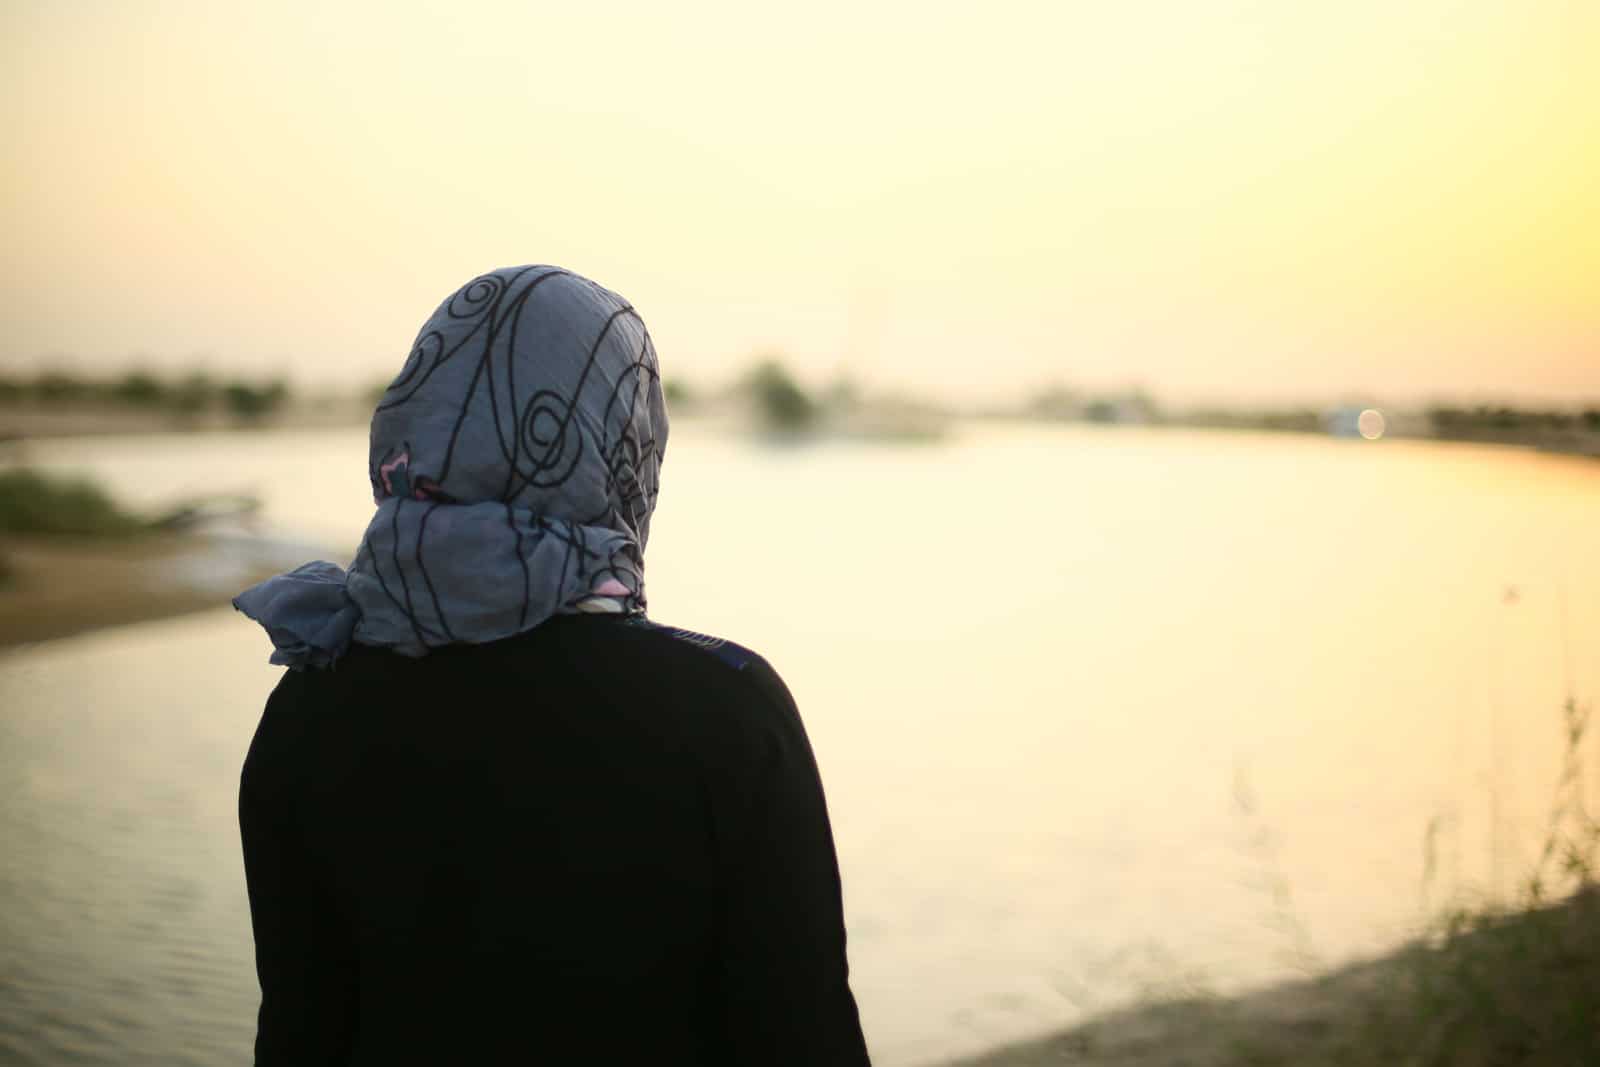 Muslim lady standing near beautiful landscape